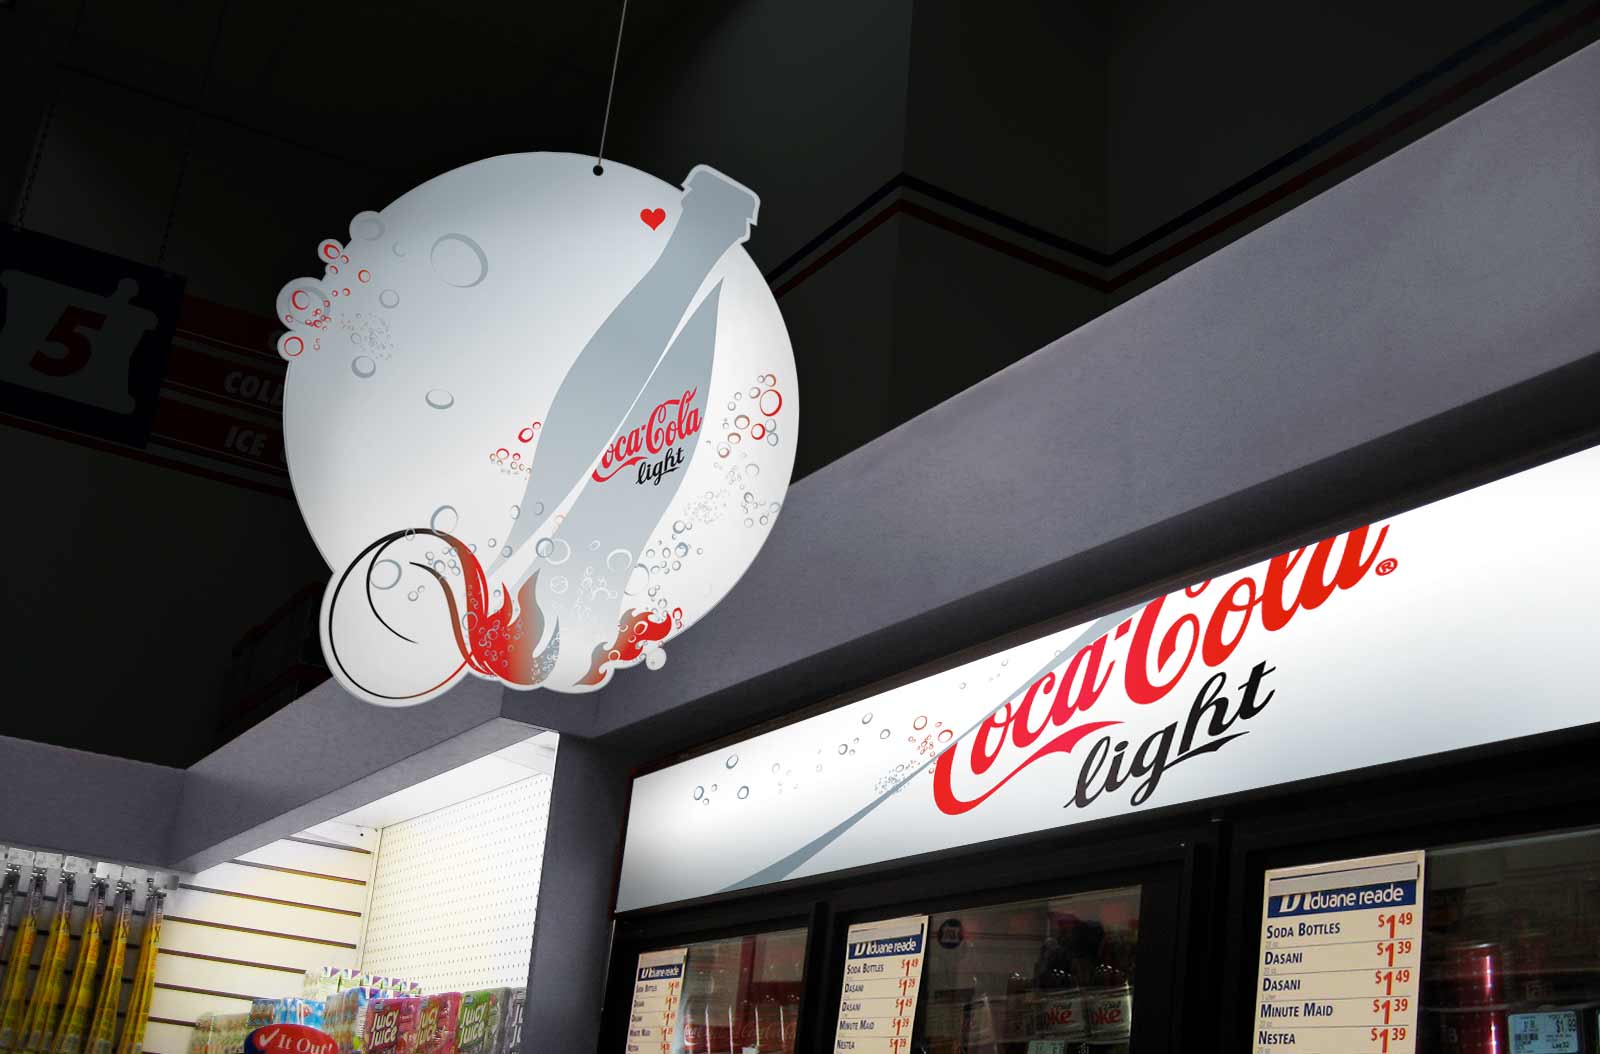 Coca-Cola Light ceiling dangler